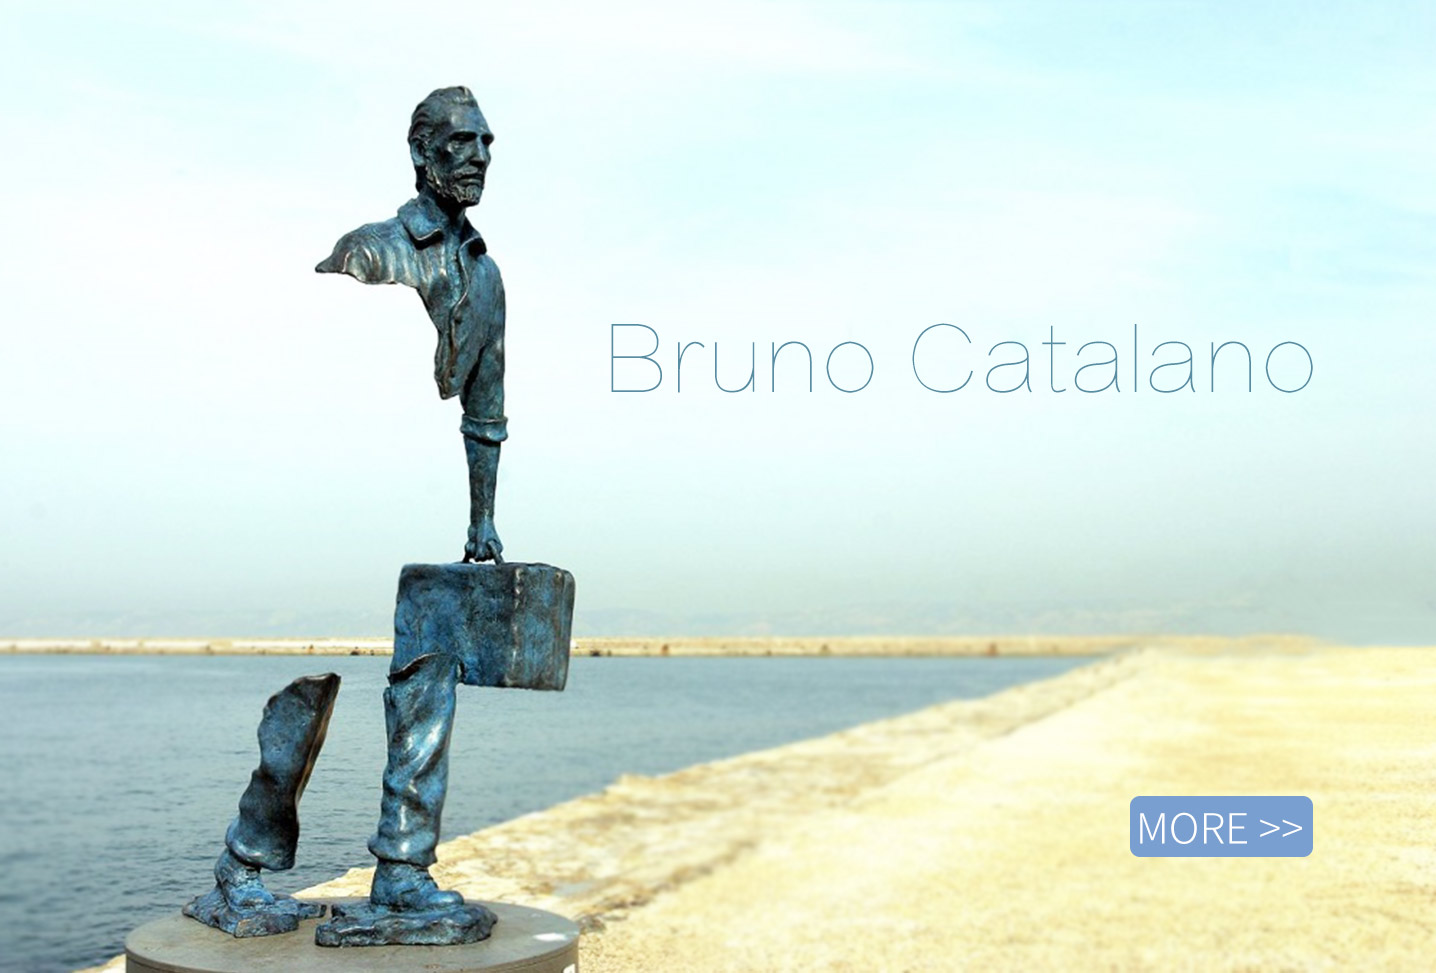 Bronze sculpture Bruno Catalano